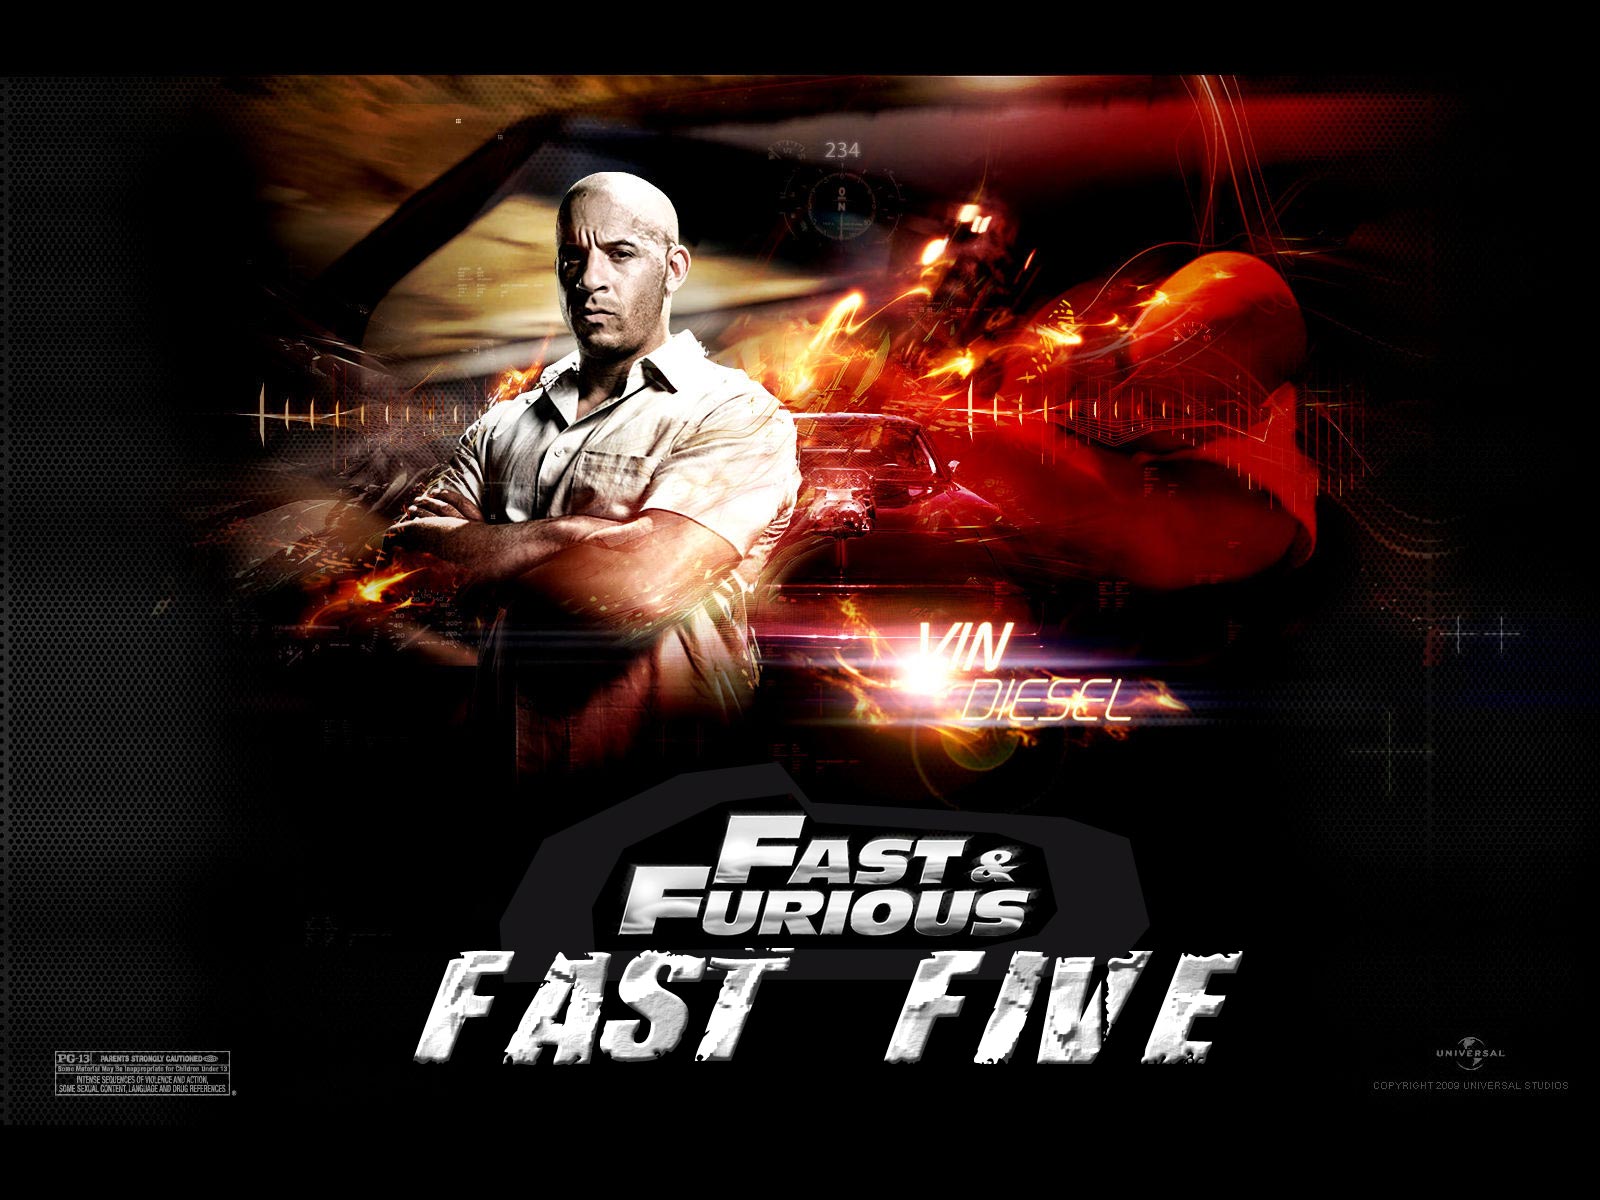 http://www.filmofilia.com/wp-content/uploads/2010/02/fast_and_furious_5_fast_five_wallpaper.jpg